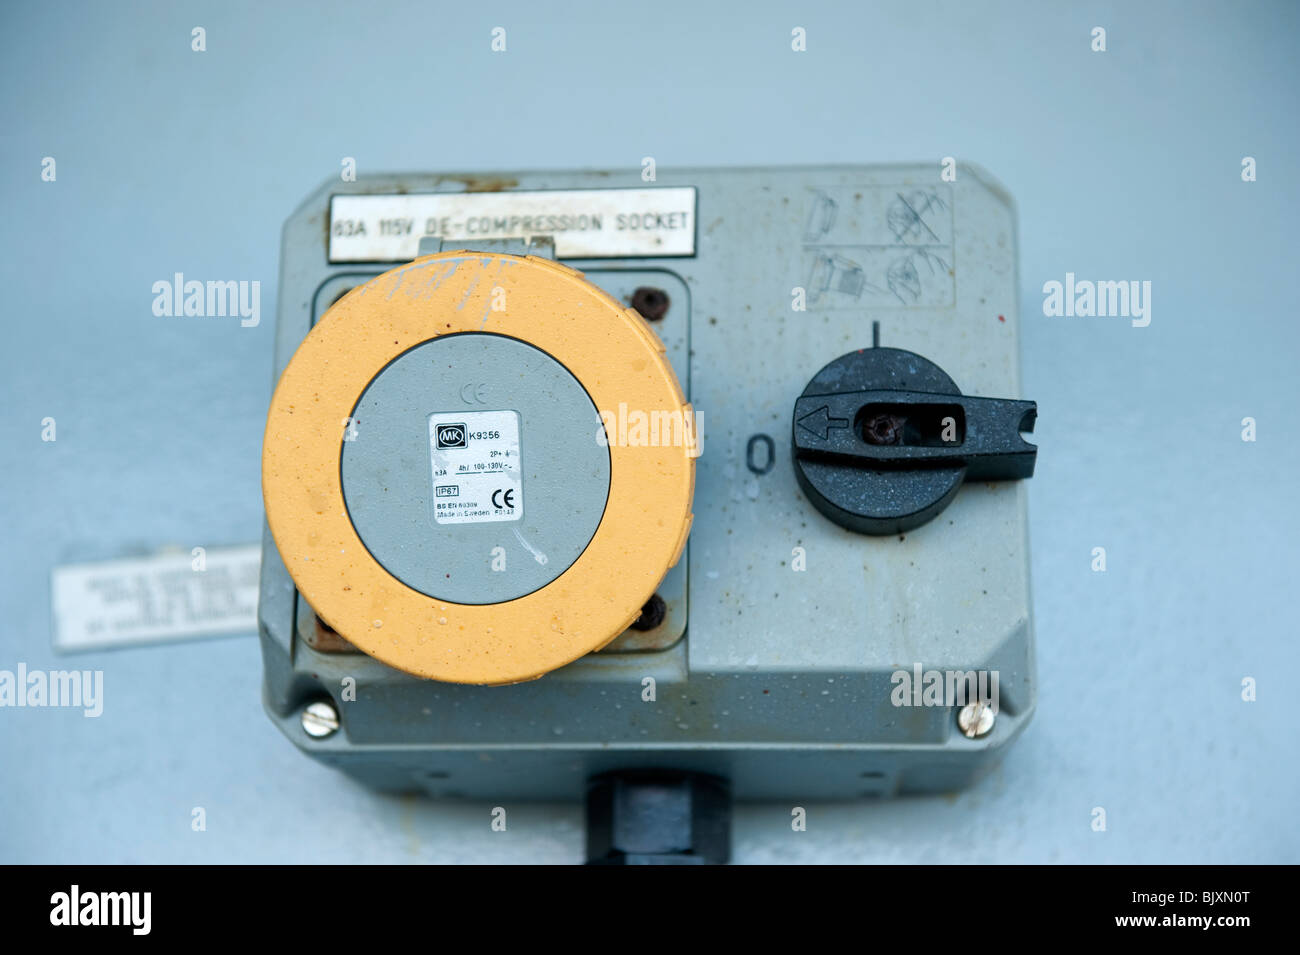 115 V IP67 Waterproof de-compression socket Stock Photo